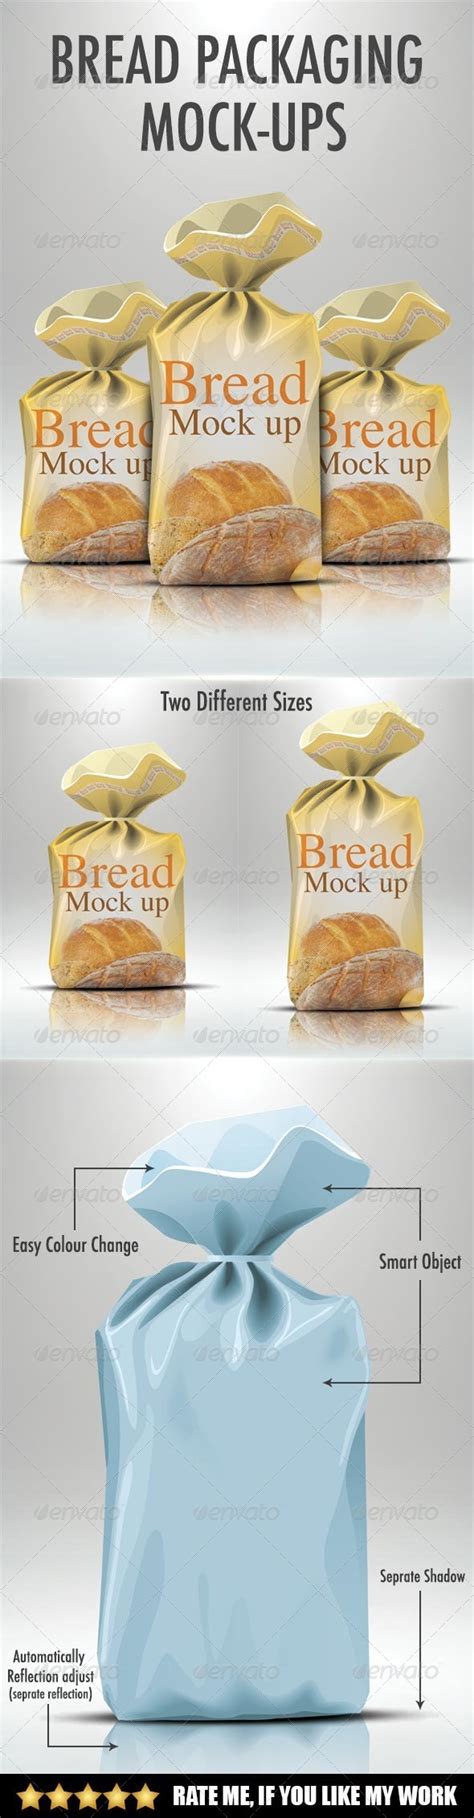 bread packaging mock   artsignz graphicriver